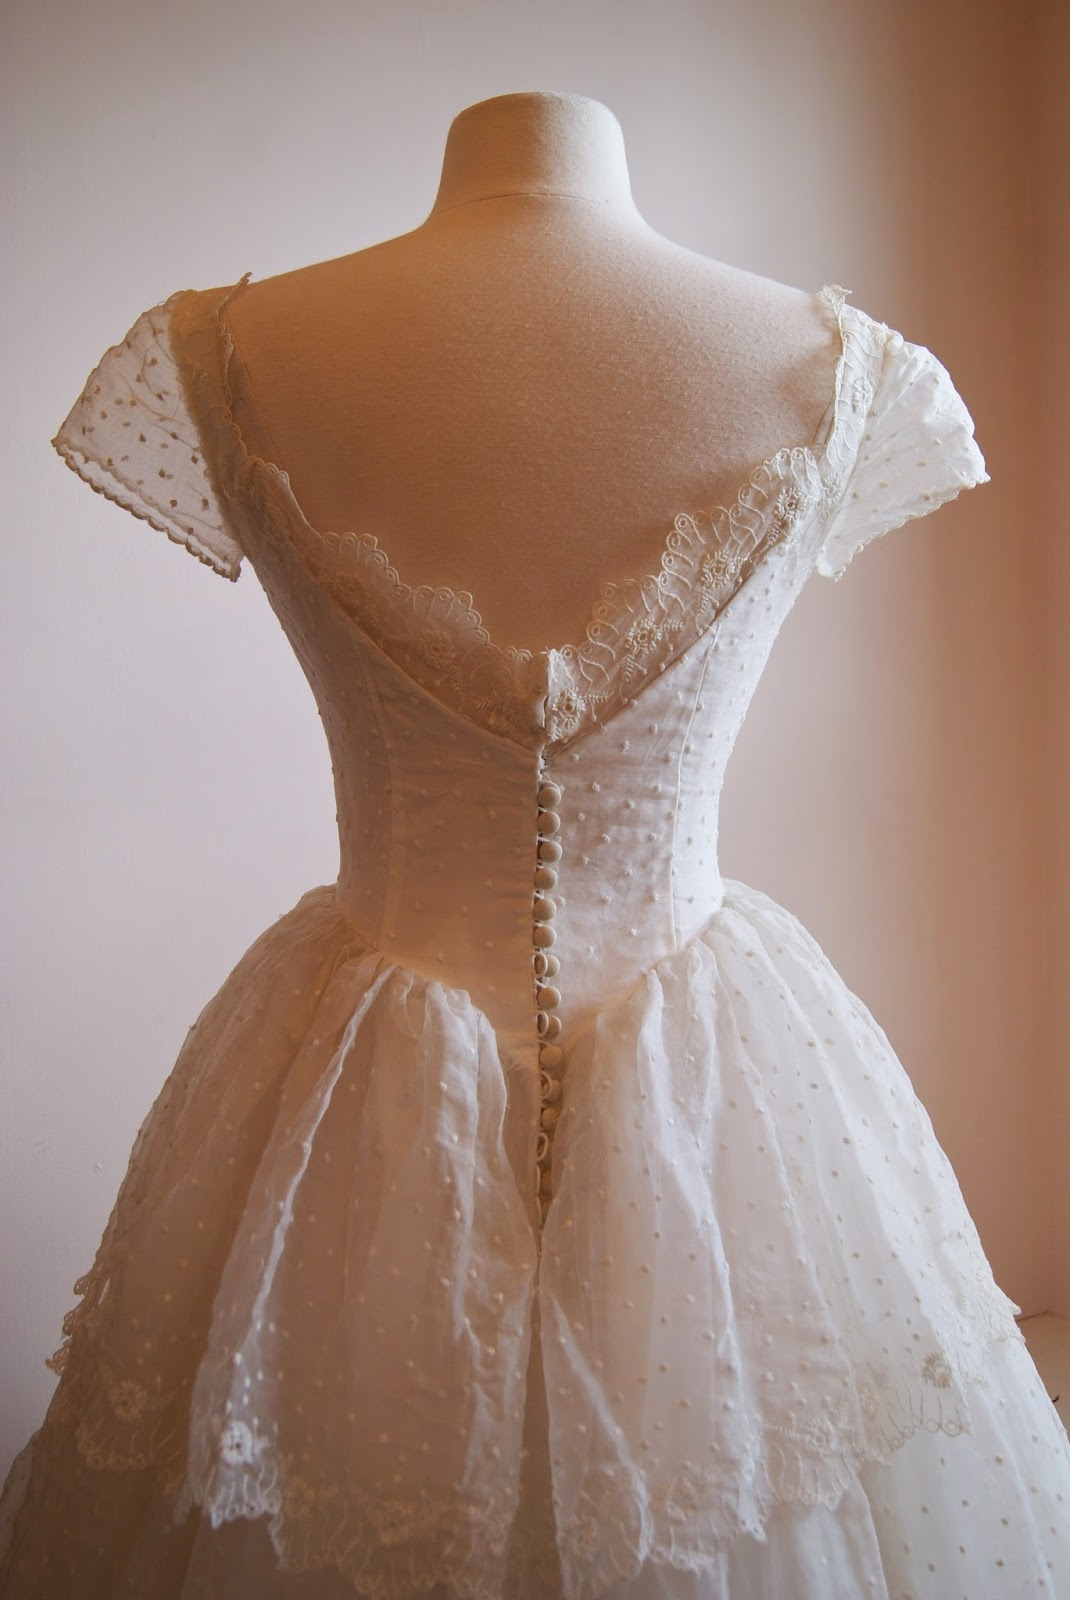 Cotton organdy wedding dress